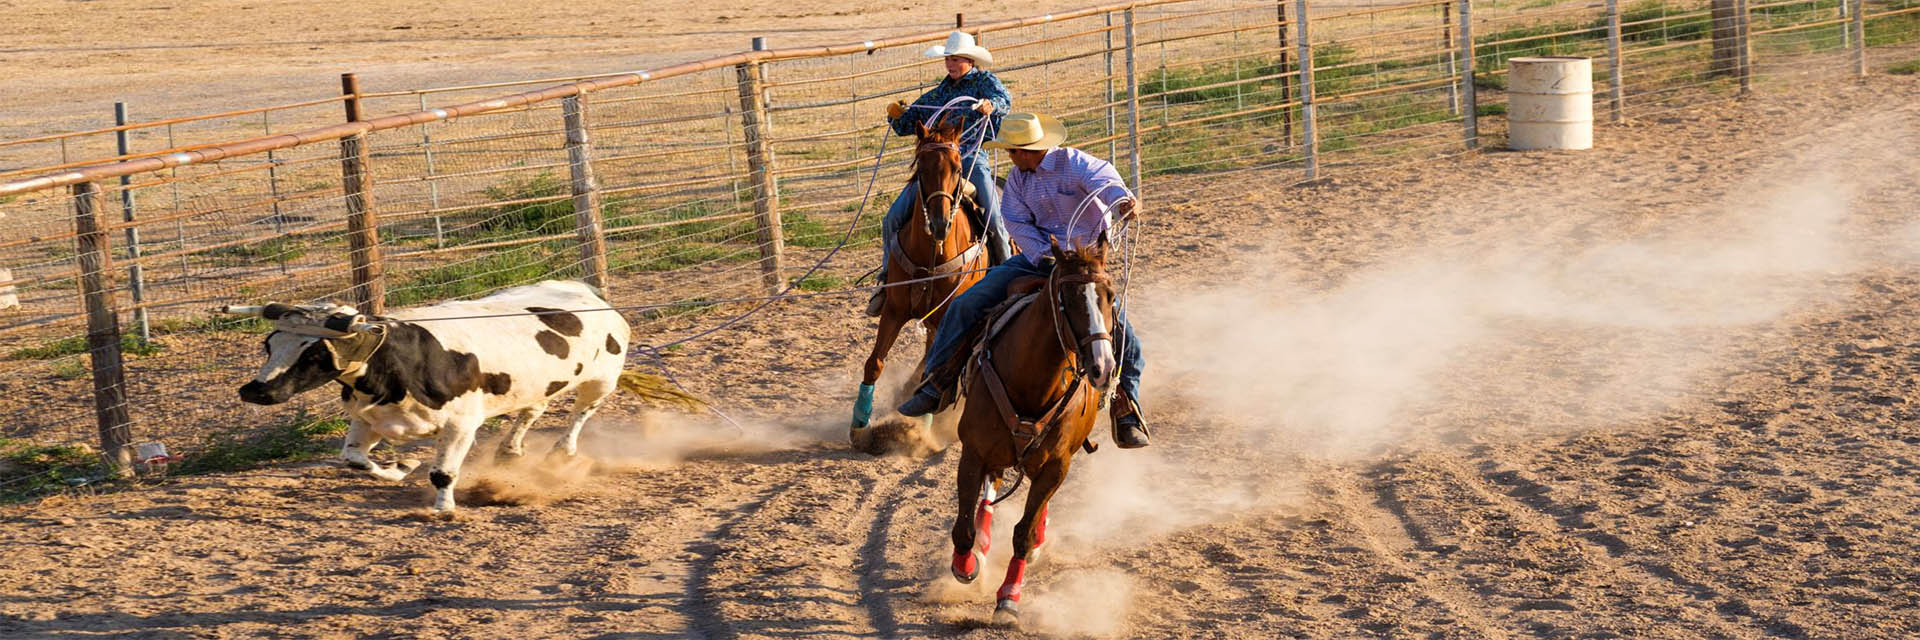 Cowboy on horse roping calf